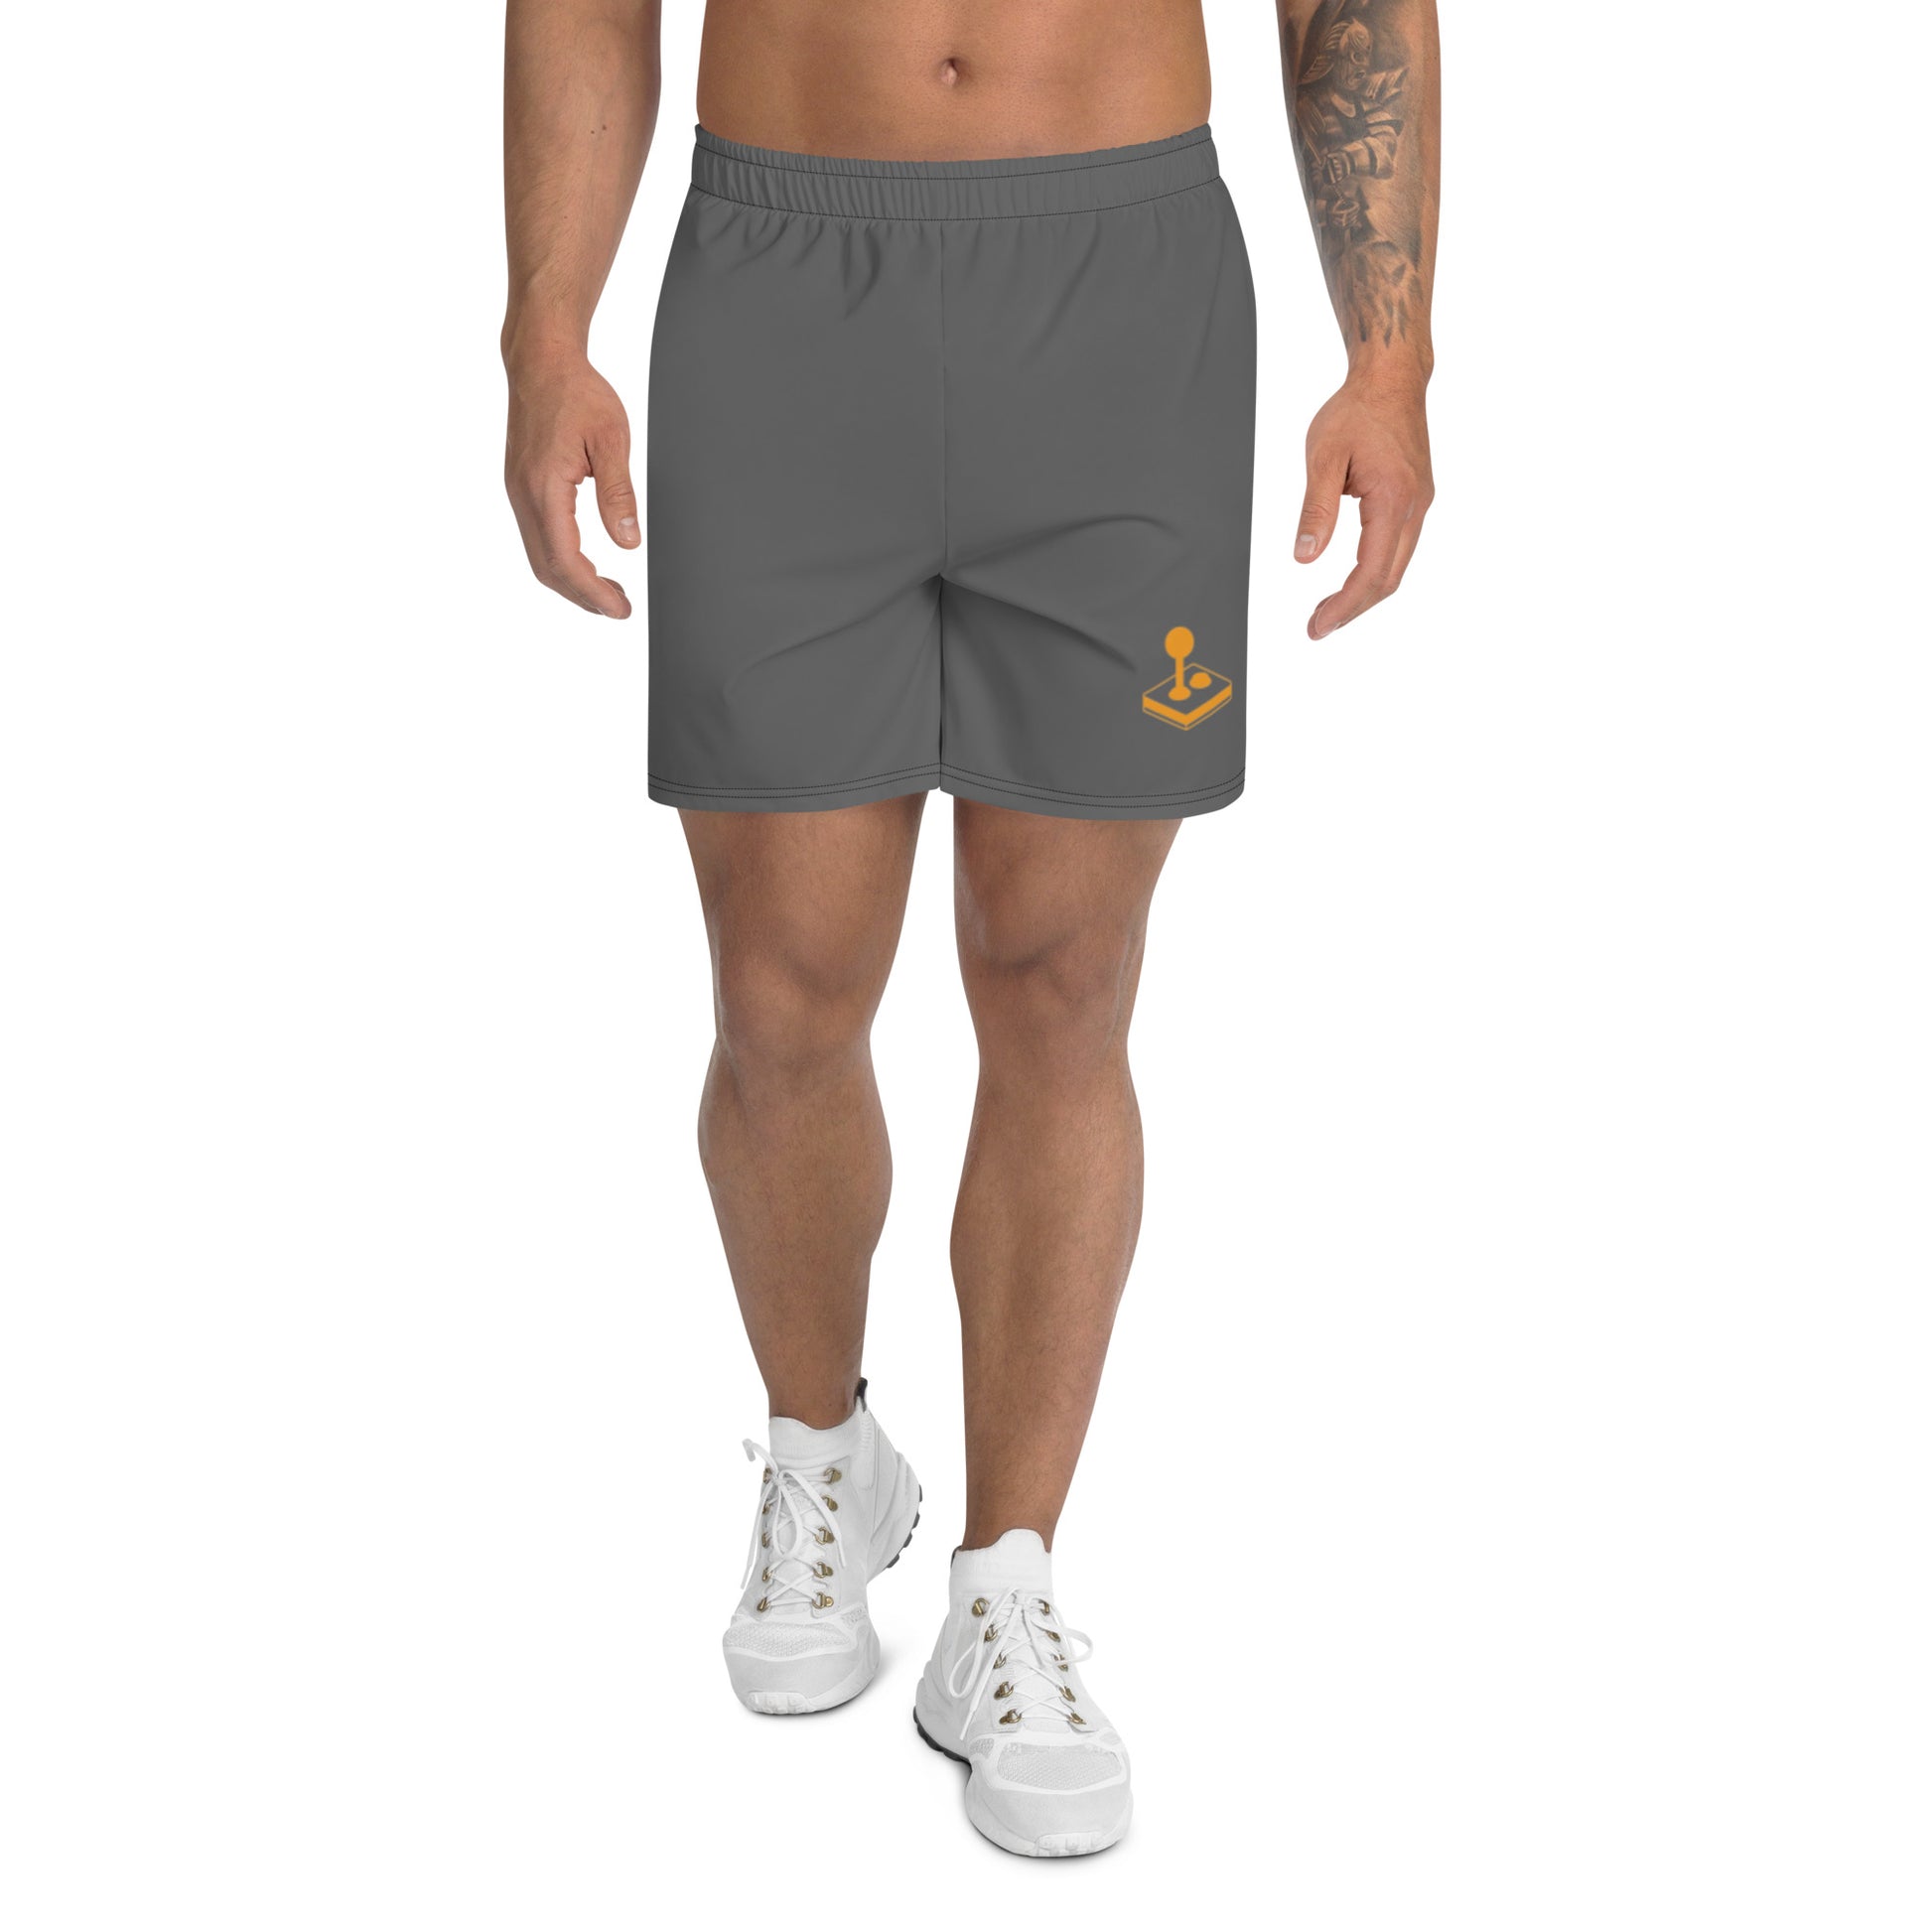 Joystick men's athletic shorts